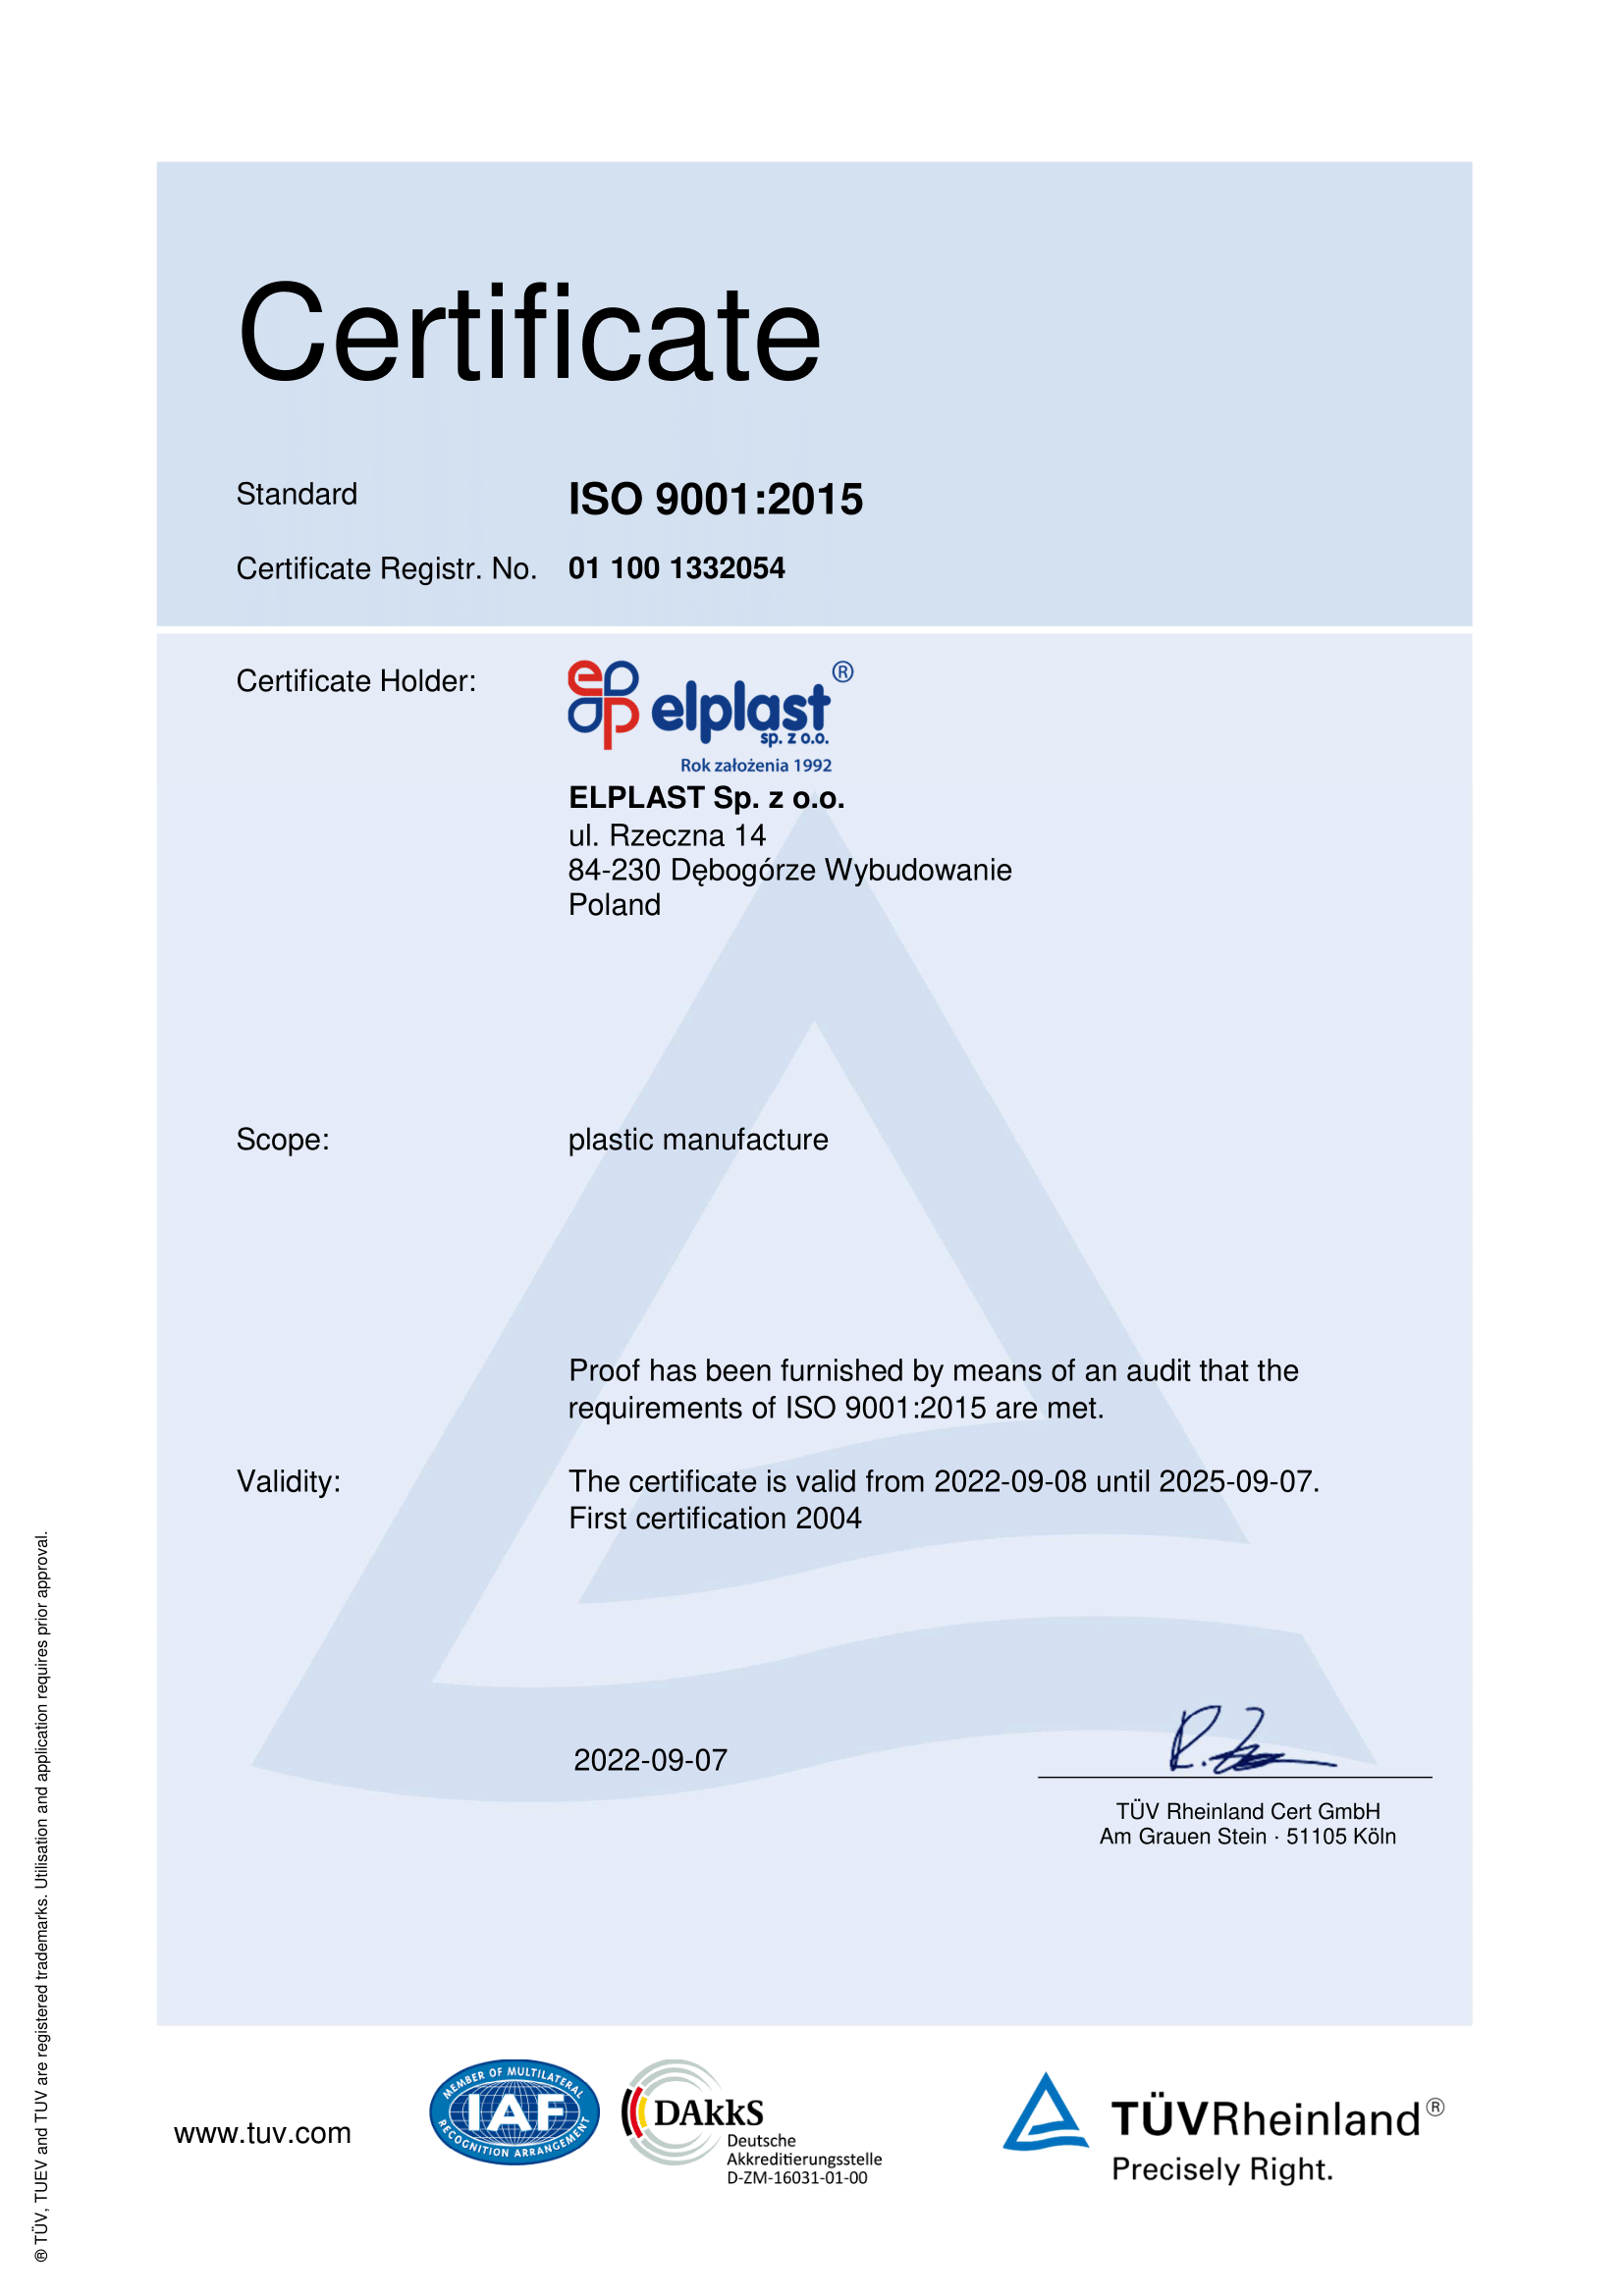 Mockup of a TUV Rheinland certificate of ISO quality